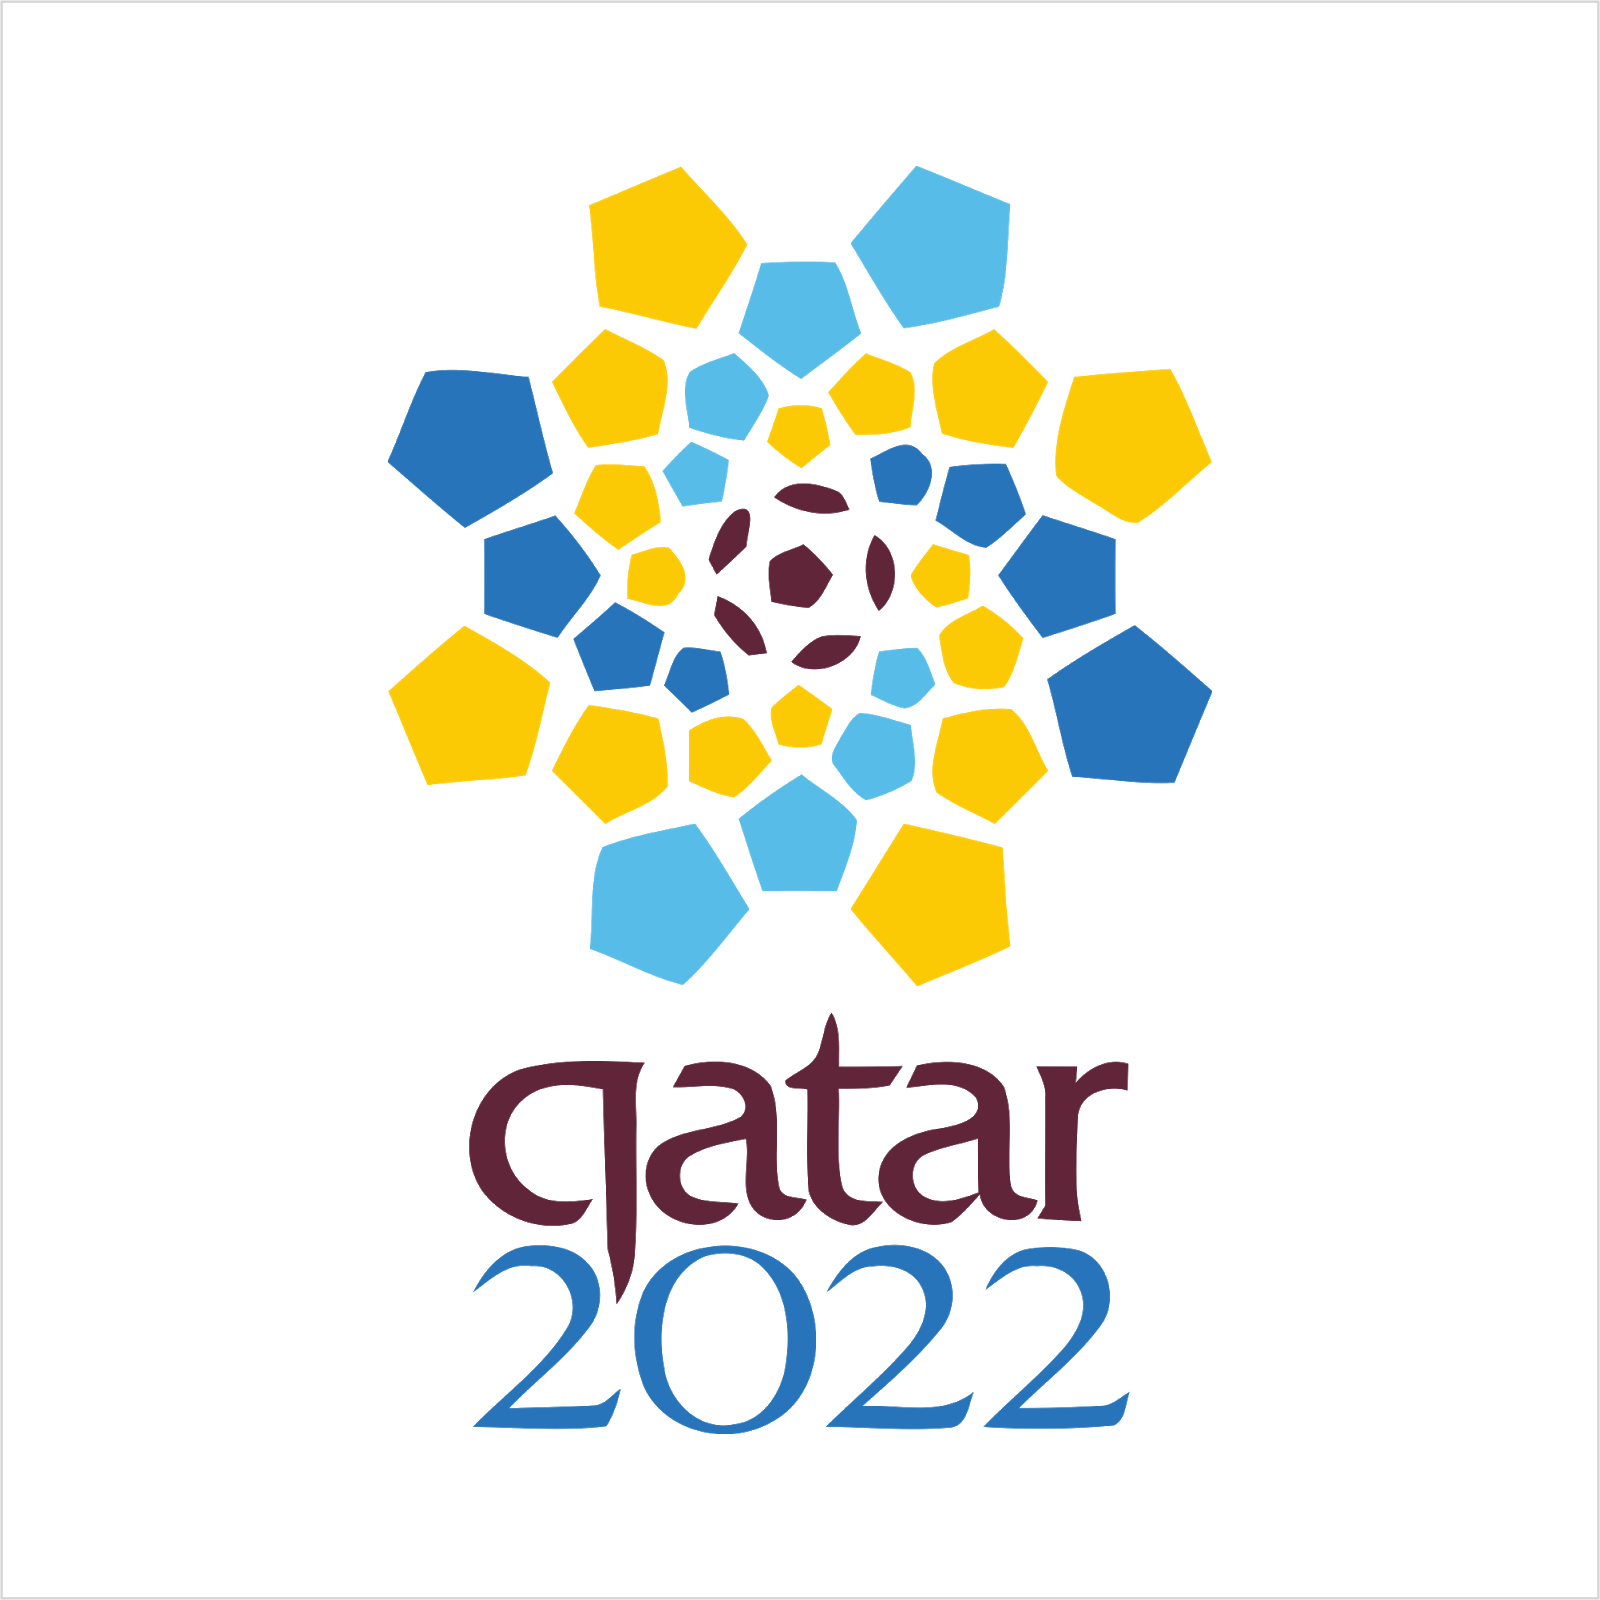 2022 FIFA World Cup Logo vector (.cdr) Free Download - BlogoVector